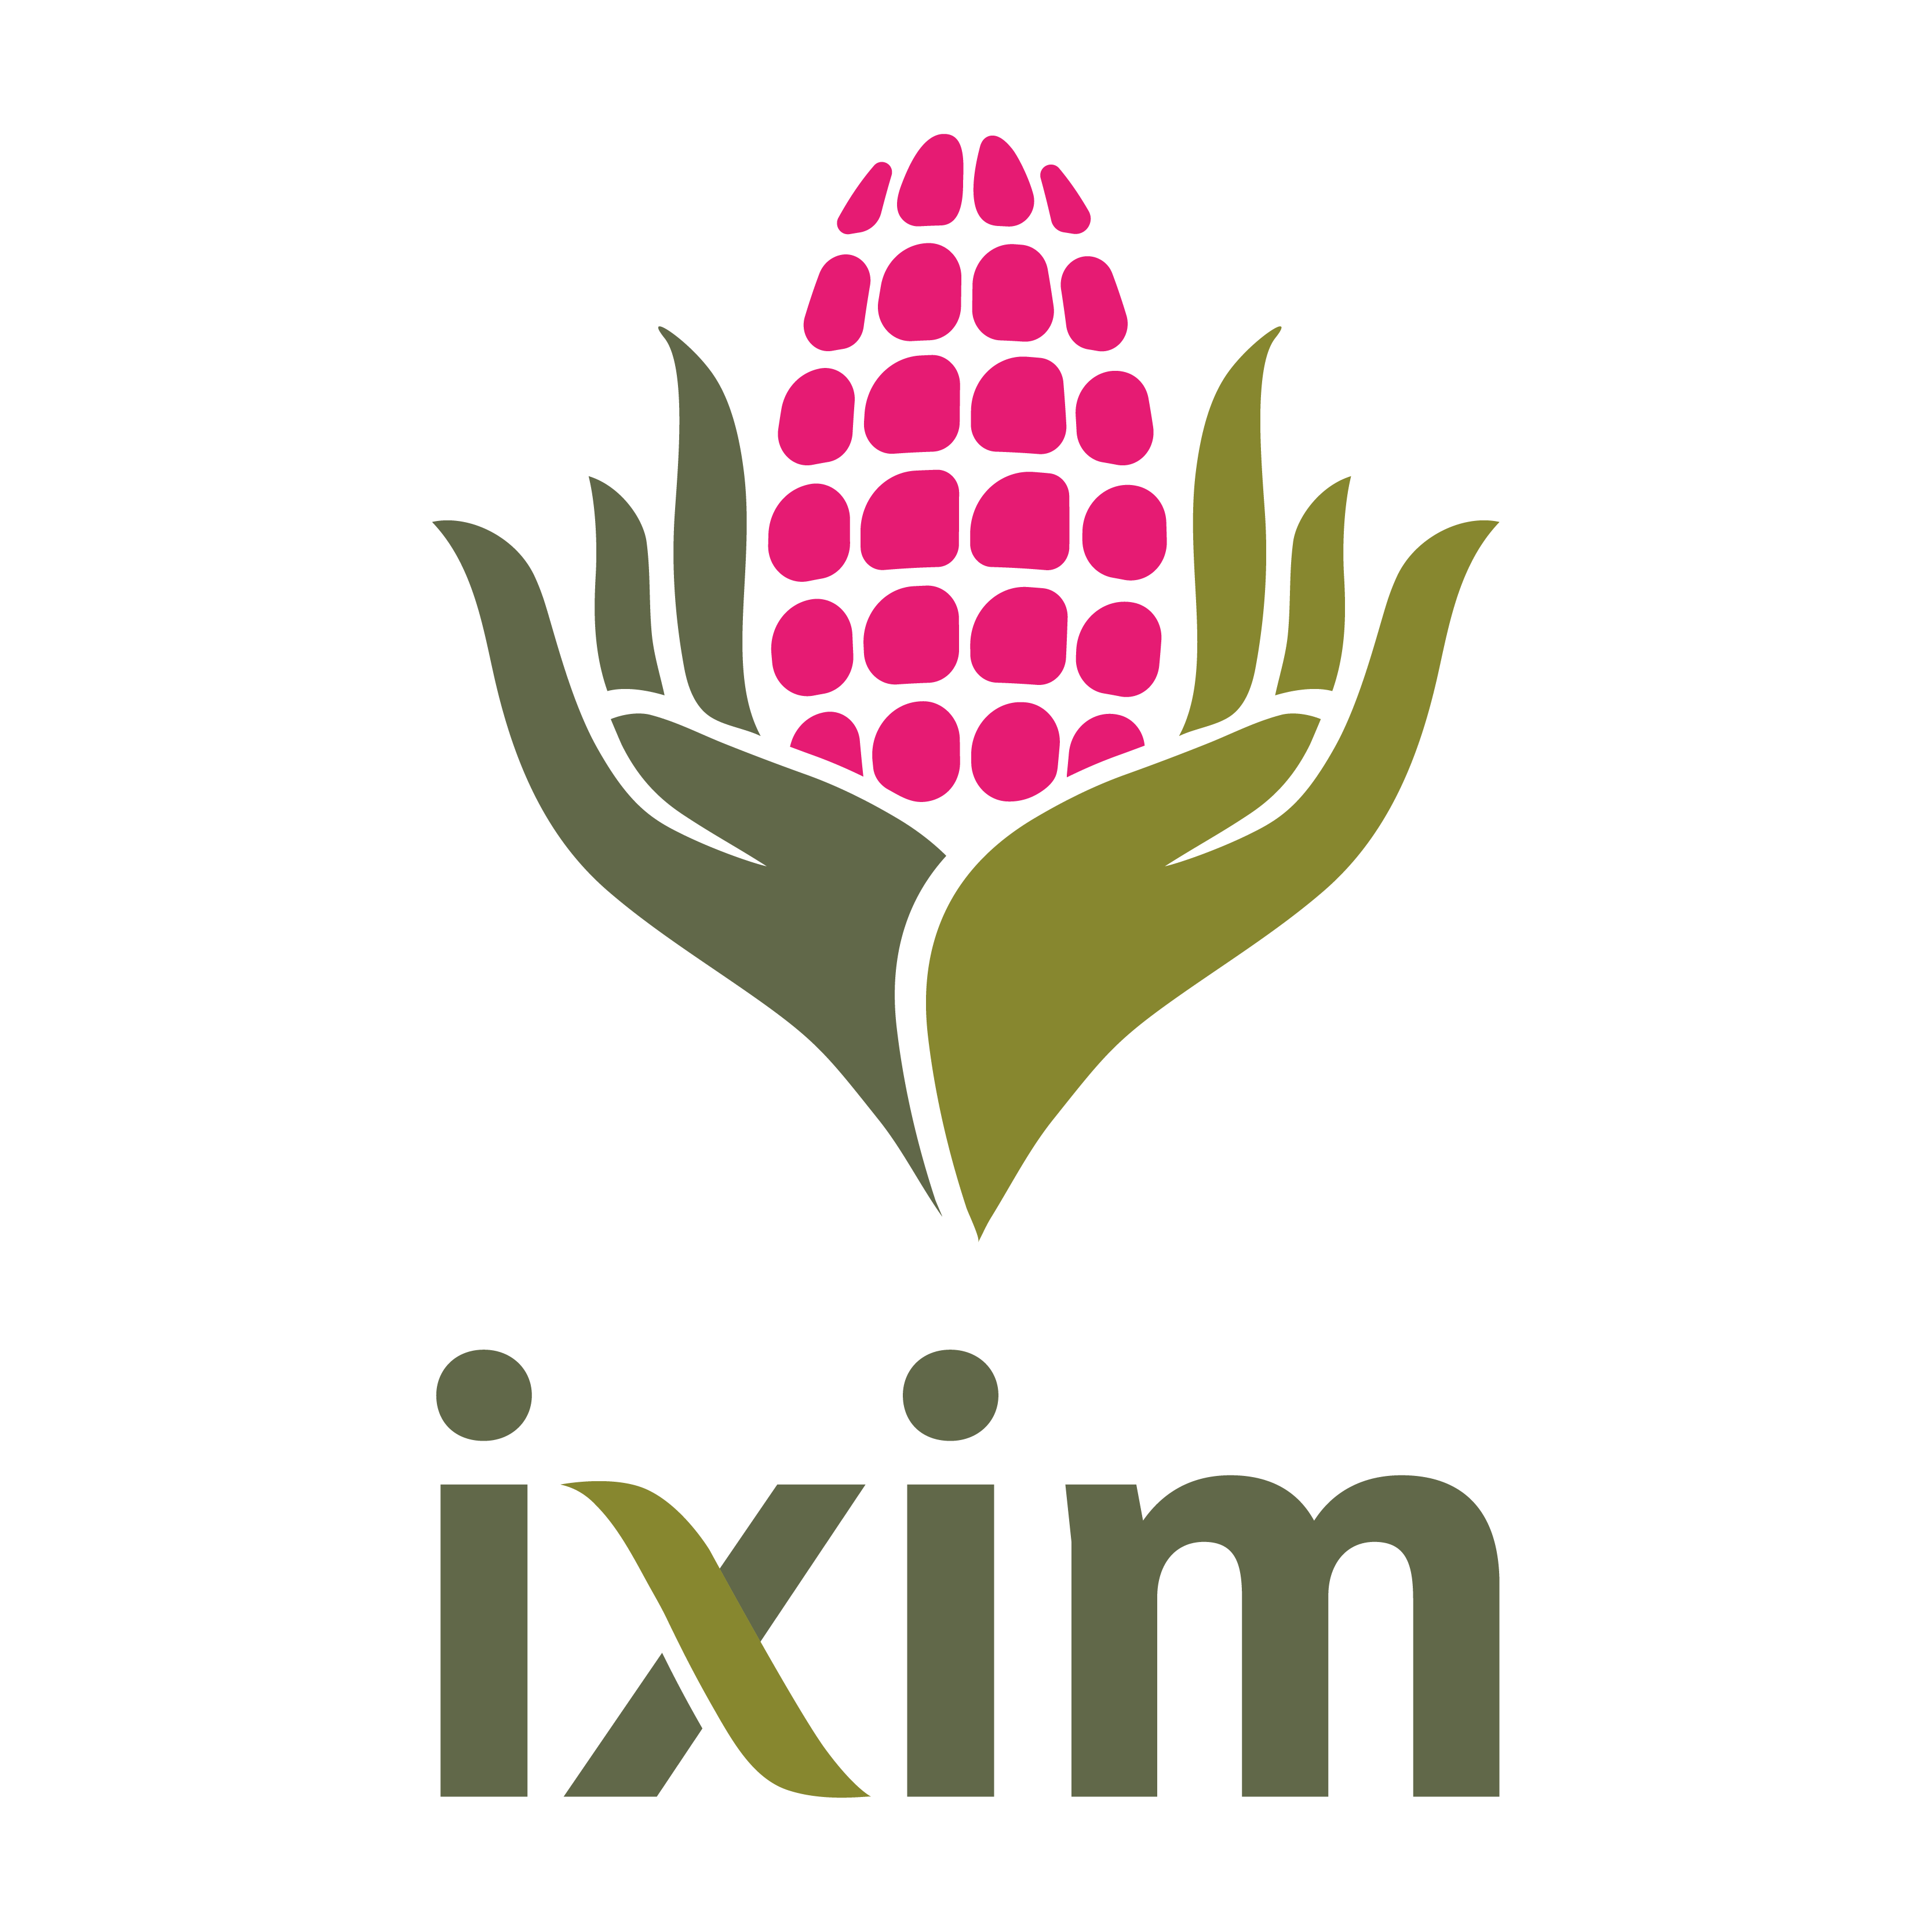 IXIM AC logo